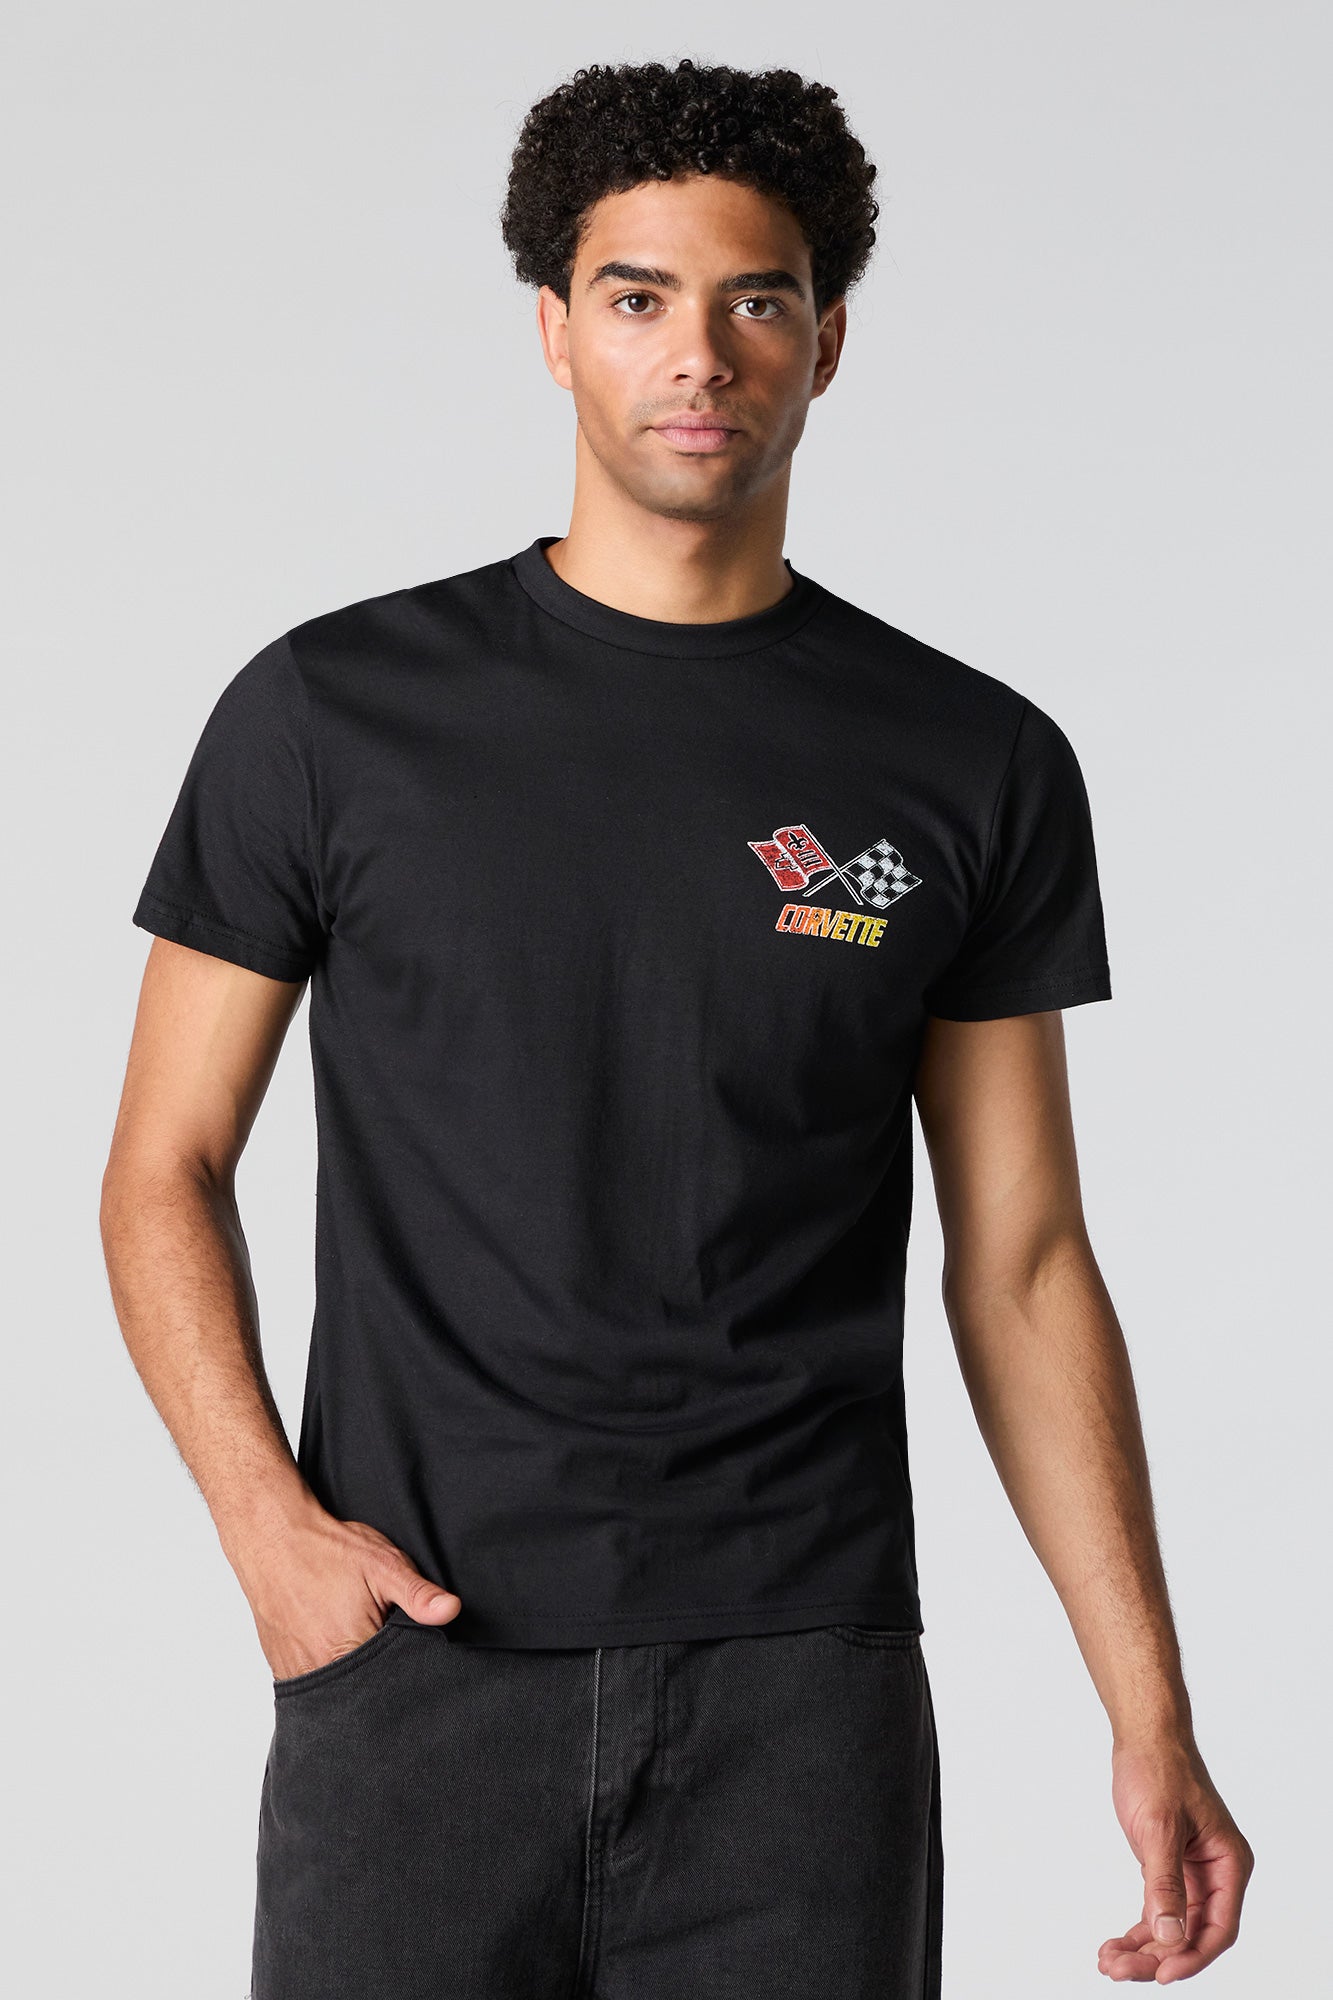 Corvette Performance Graphic T-Shirt